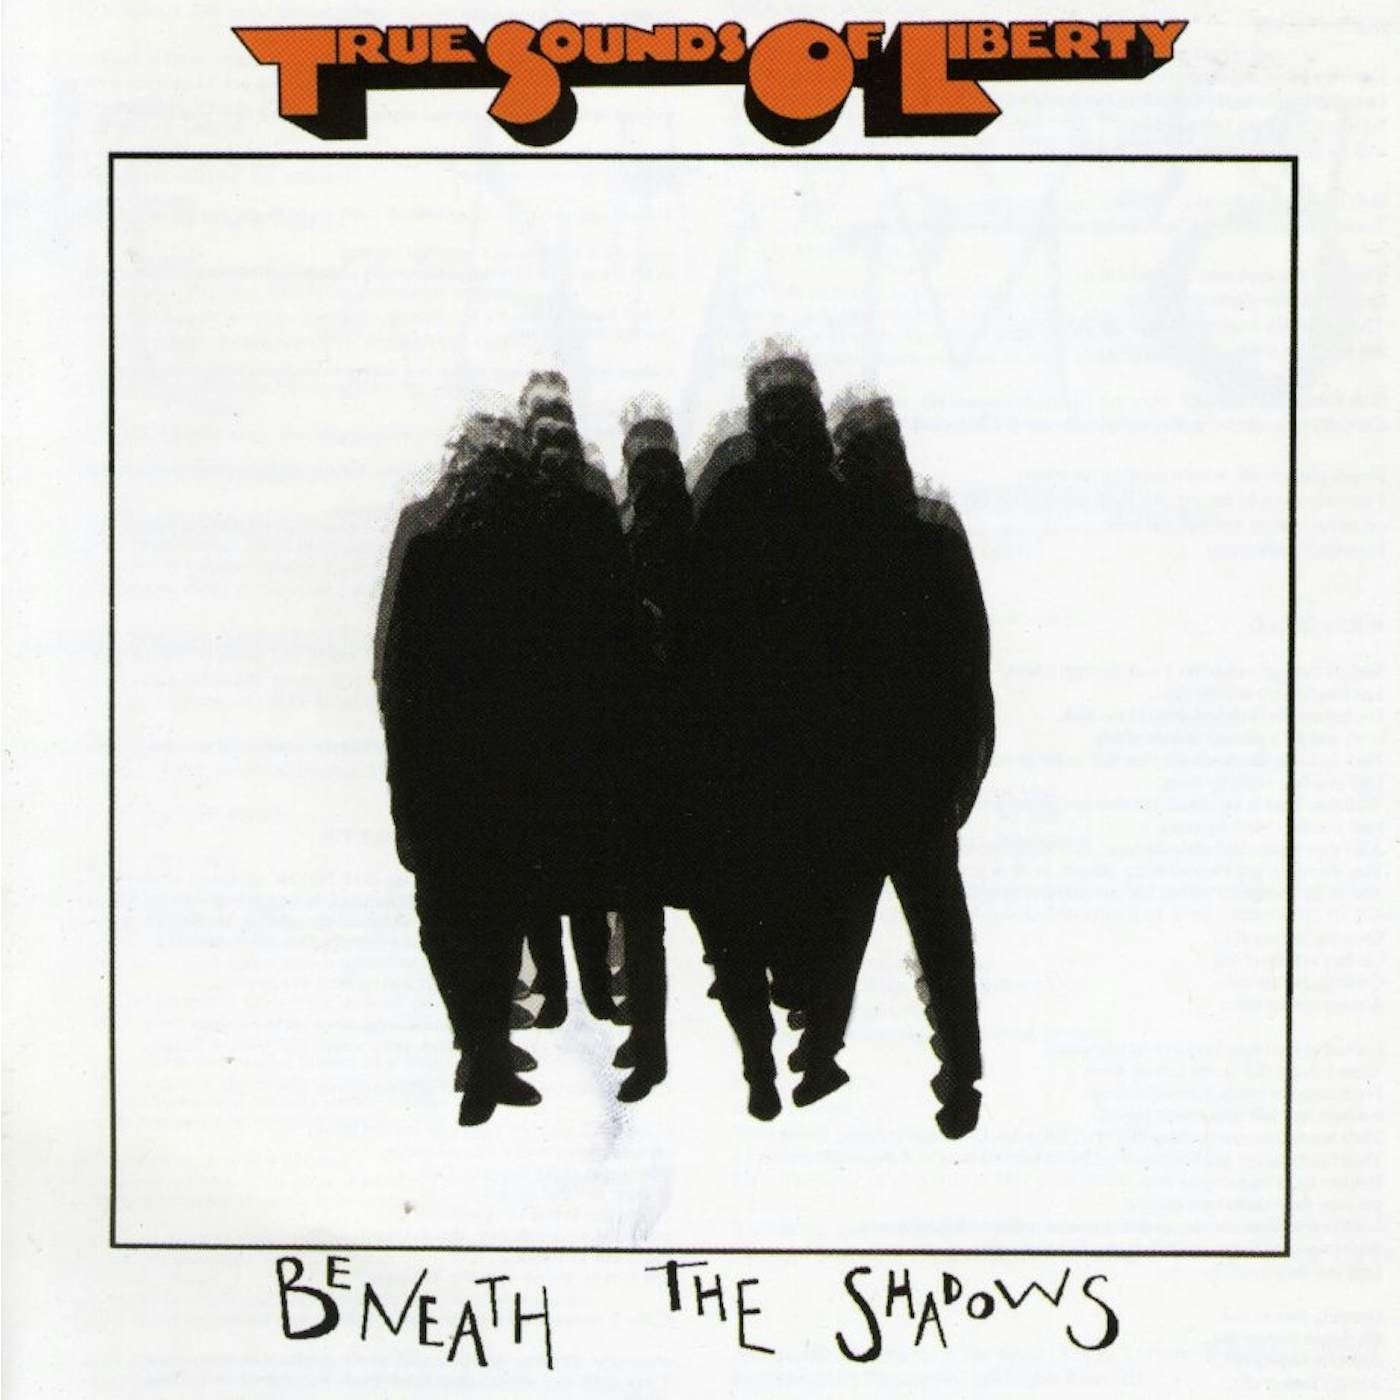 T.S.O.L. BENEATH THE SHADOWS CD